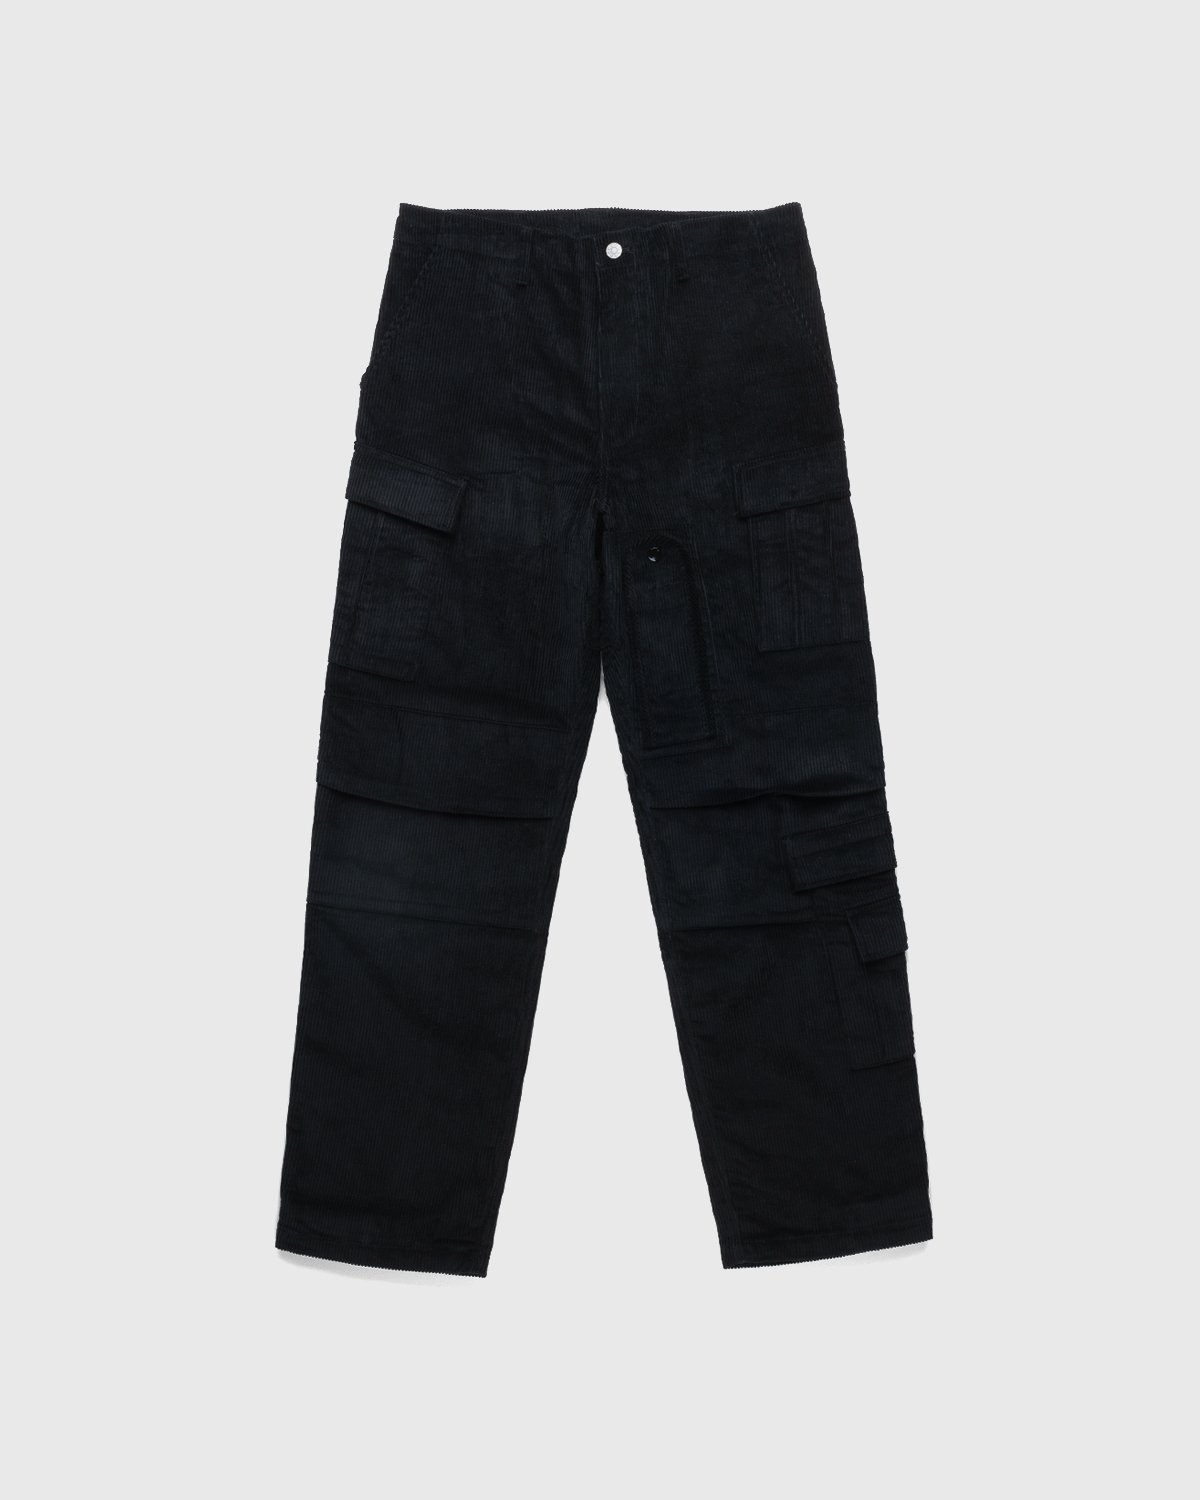 Winnie New York – Corduroy Cargo Black - Pants - Black - Image 1